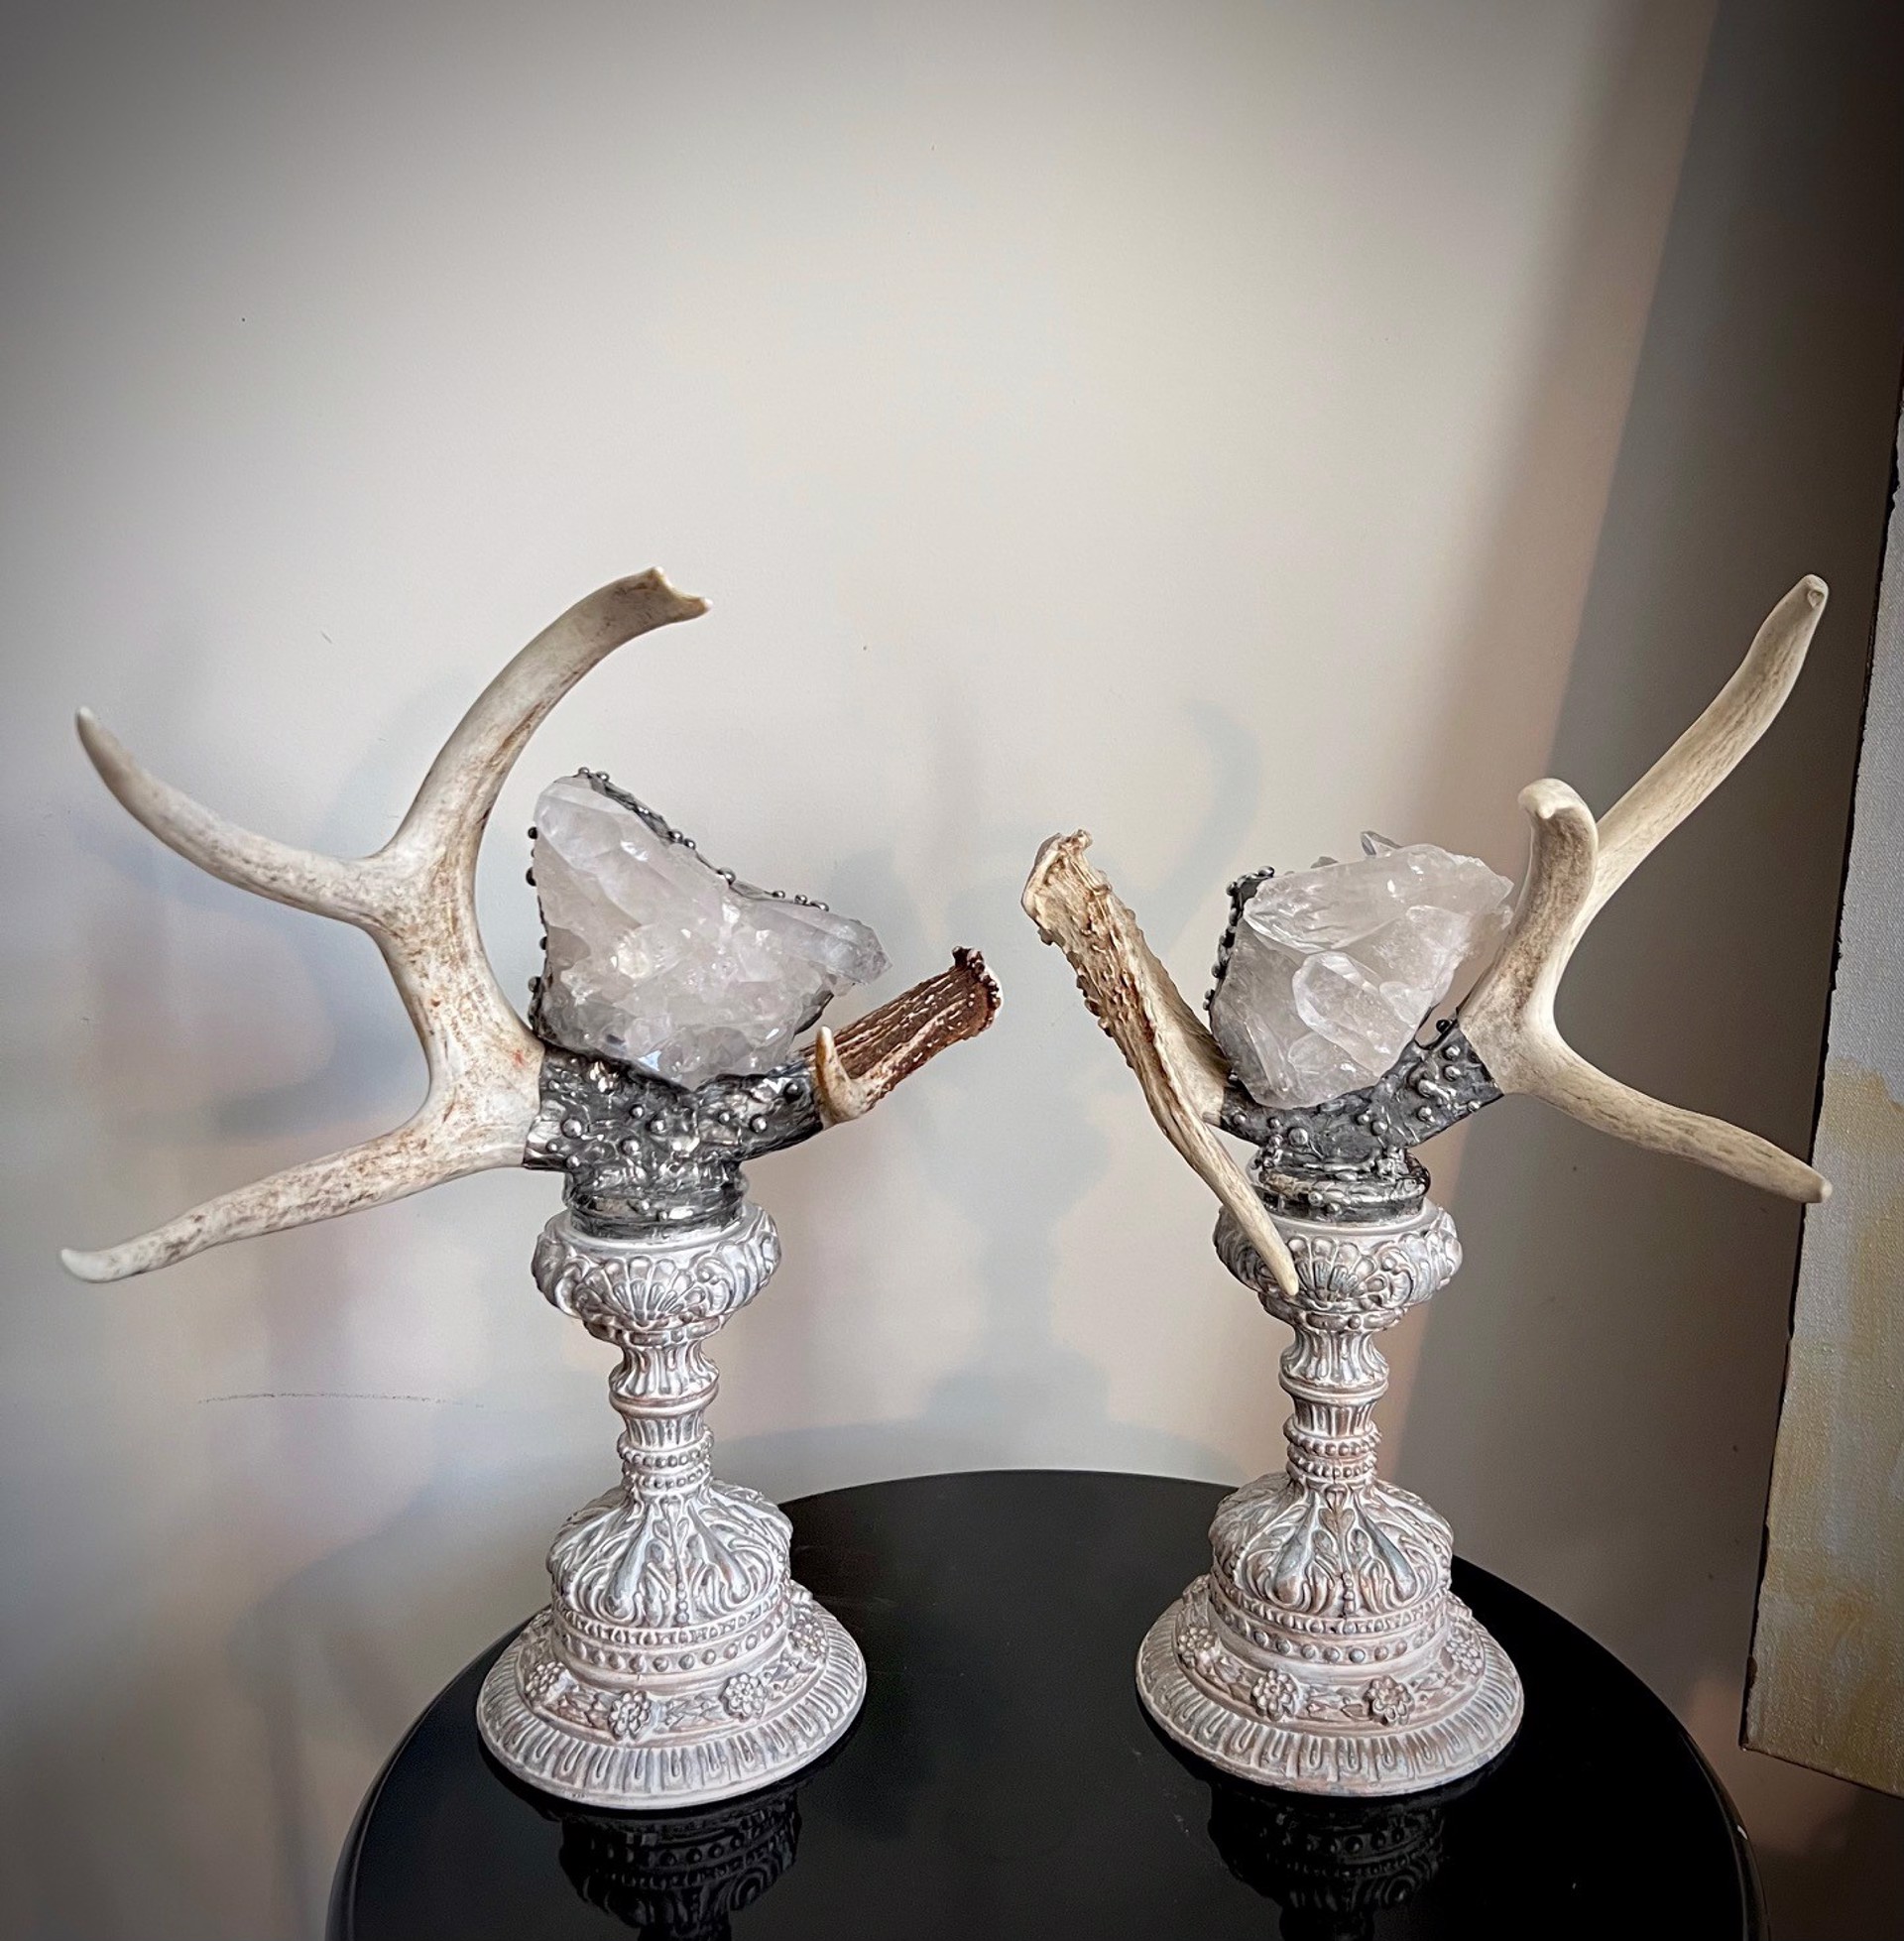 Pair White Tail Deer Antlers/Qtz on Antiqued Metal Candlesticks by Trinka 5 Designs